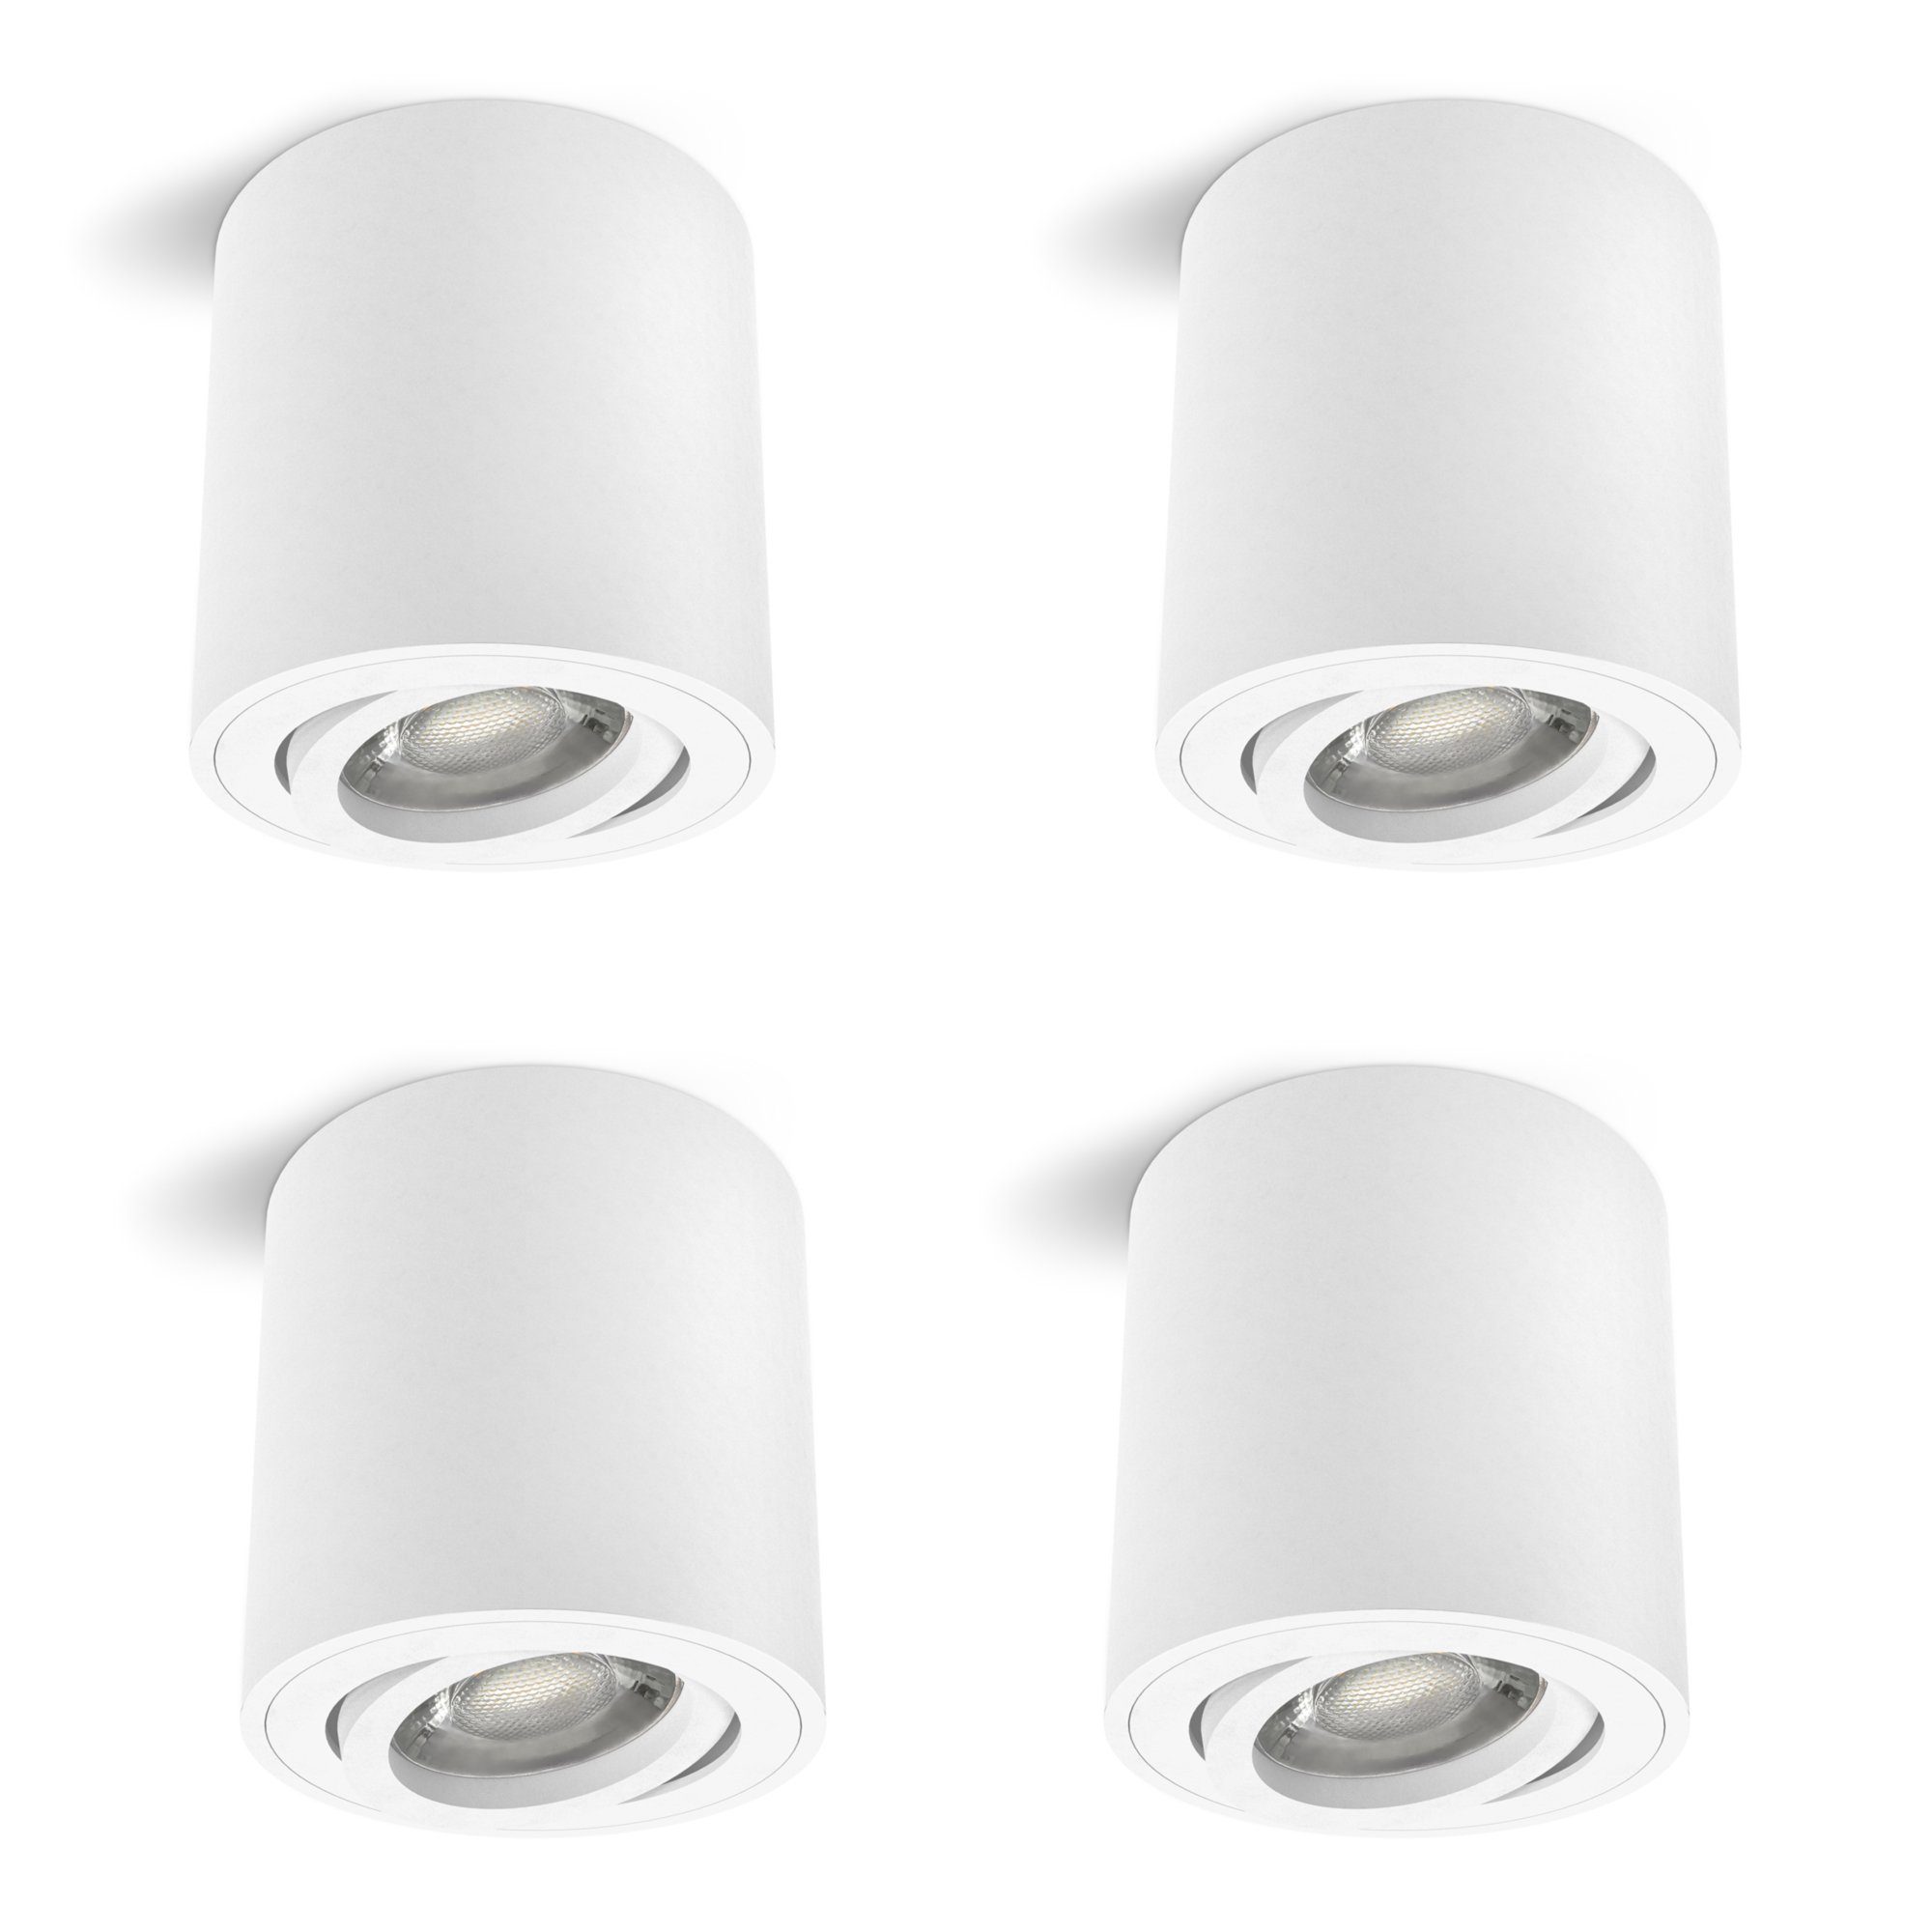 linovum LED Aufbaustrahler 4 x runde Aufbauleuchten CORI in matt weiss & schwenkbar, Leuchtmittel nicht inklusive, Leuchtmittel nicht inklusive